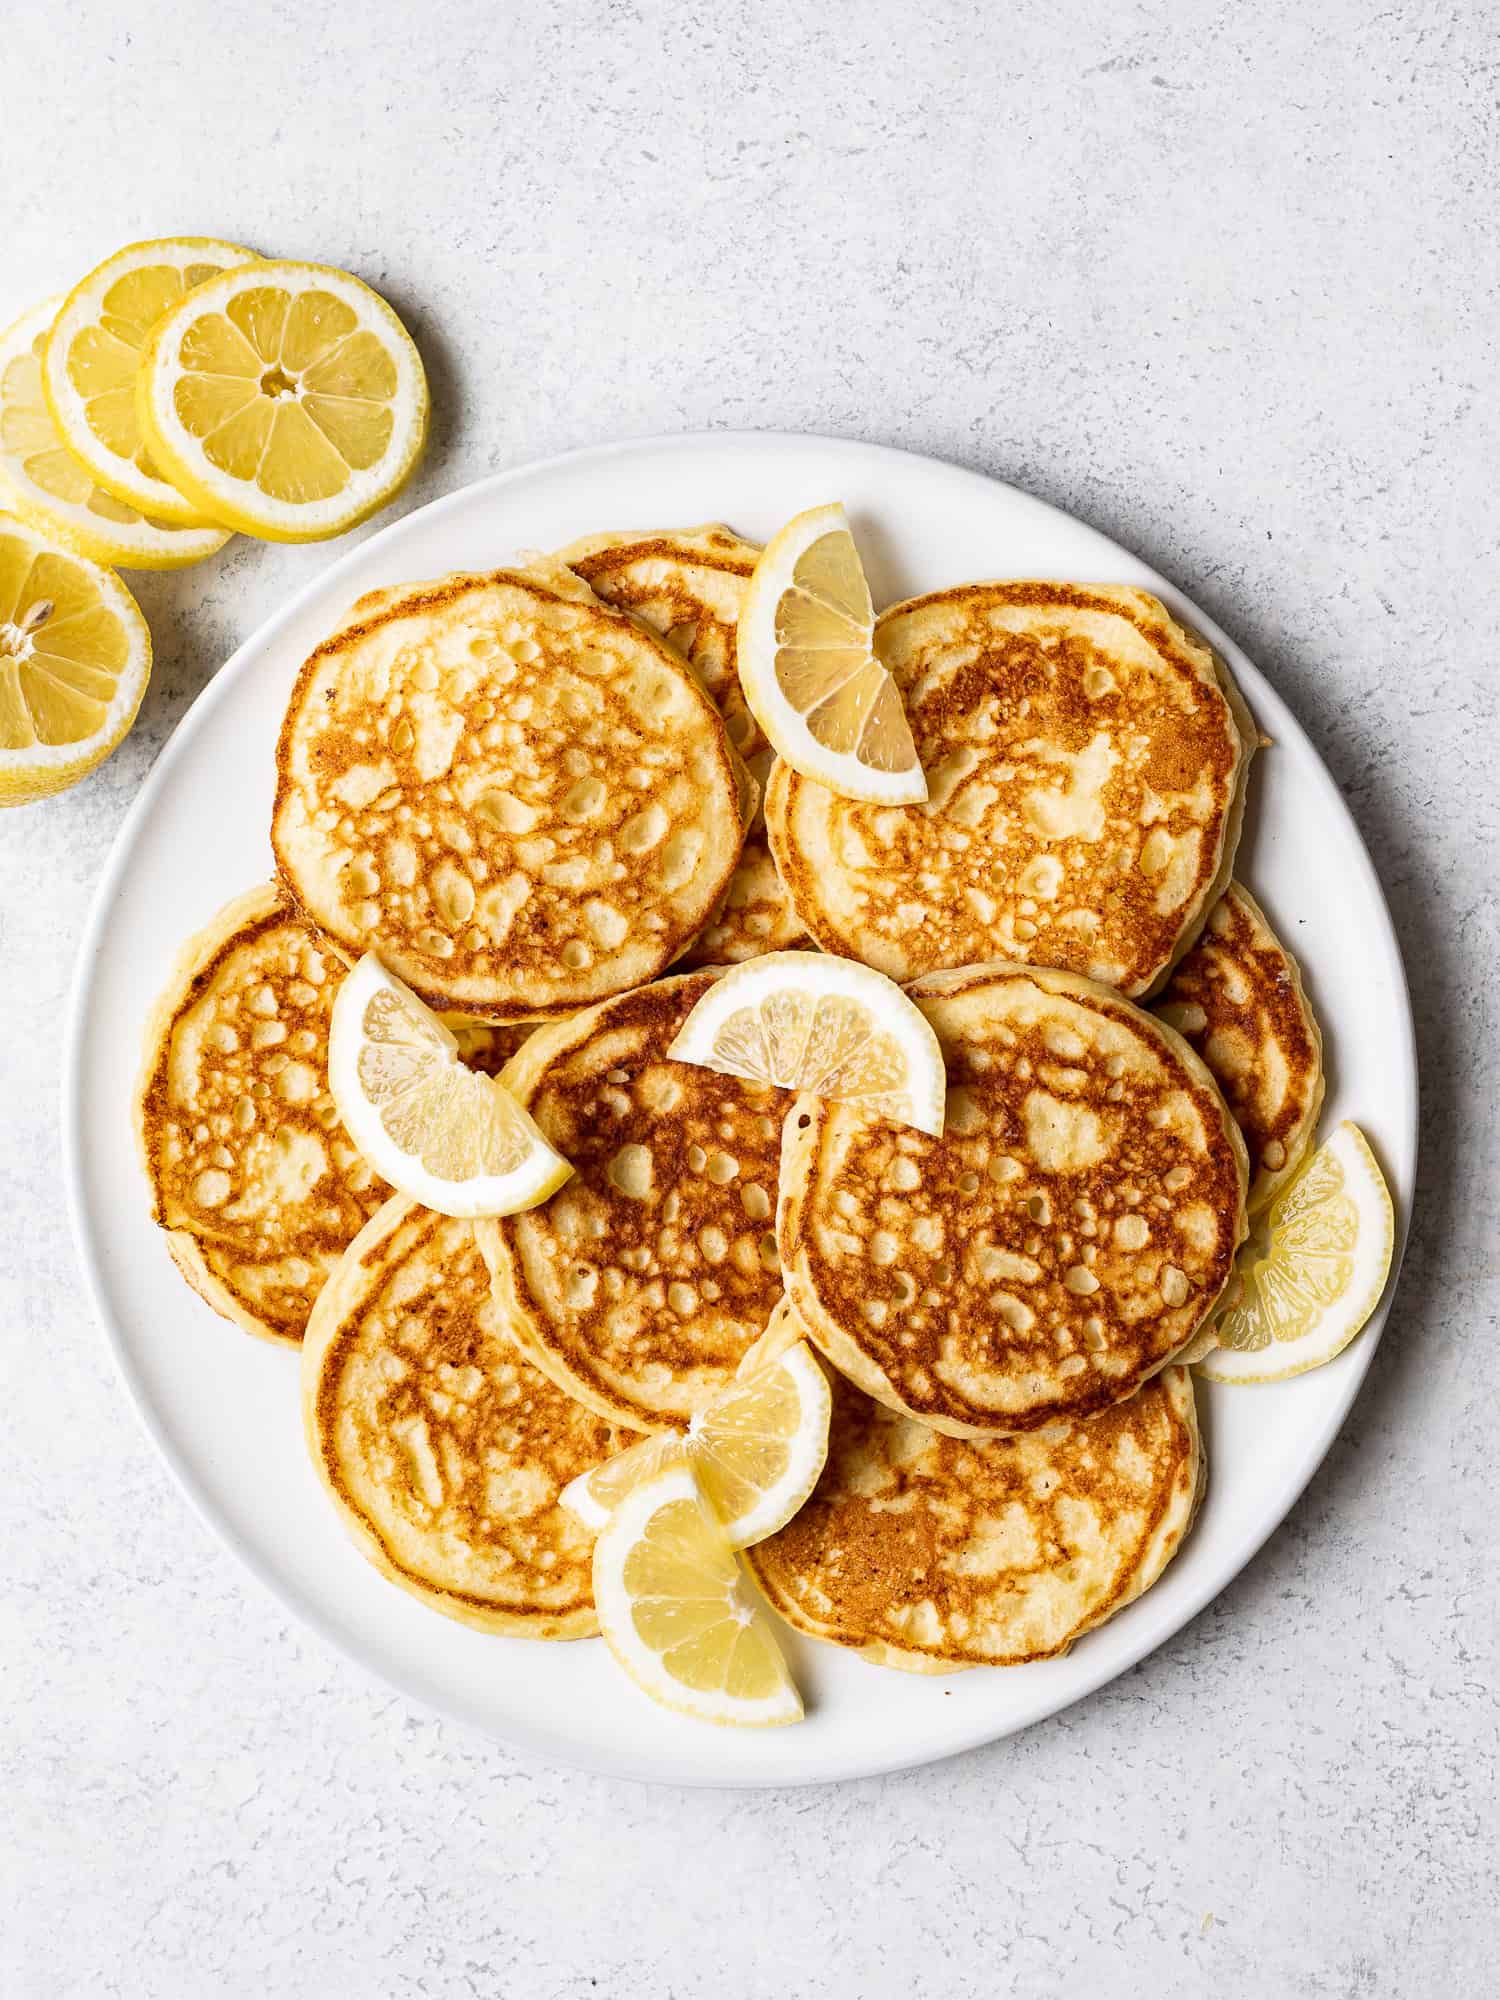 lemon ricotta pancakes on plate with slices of lemon